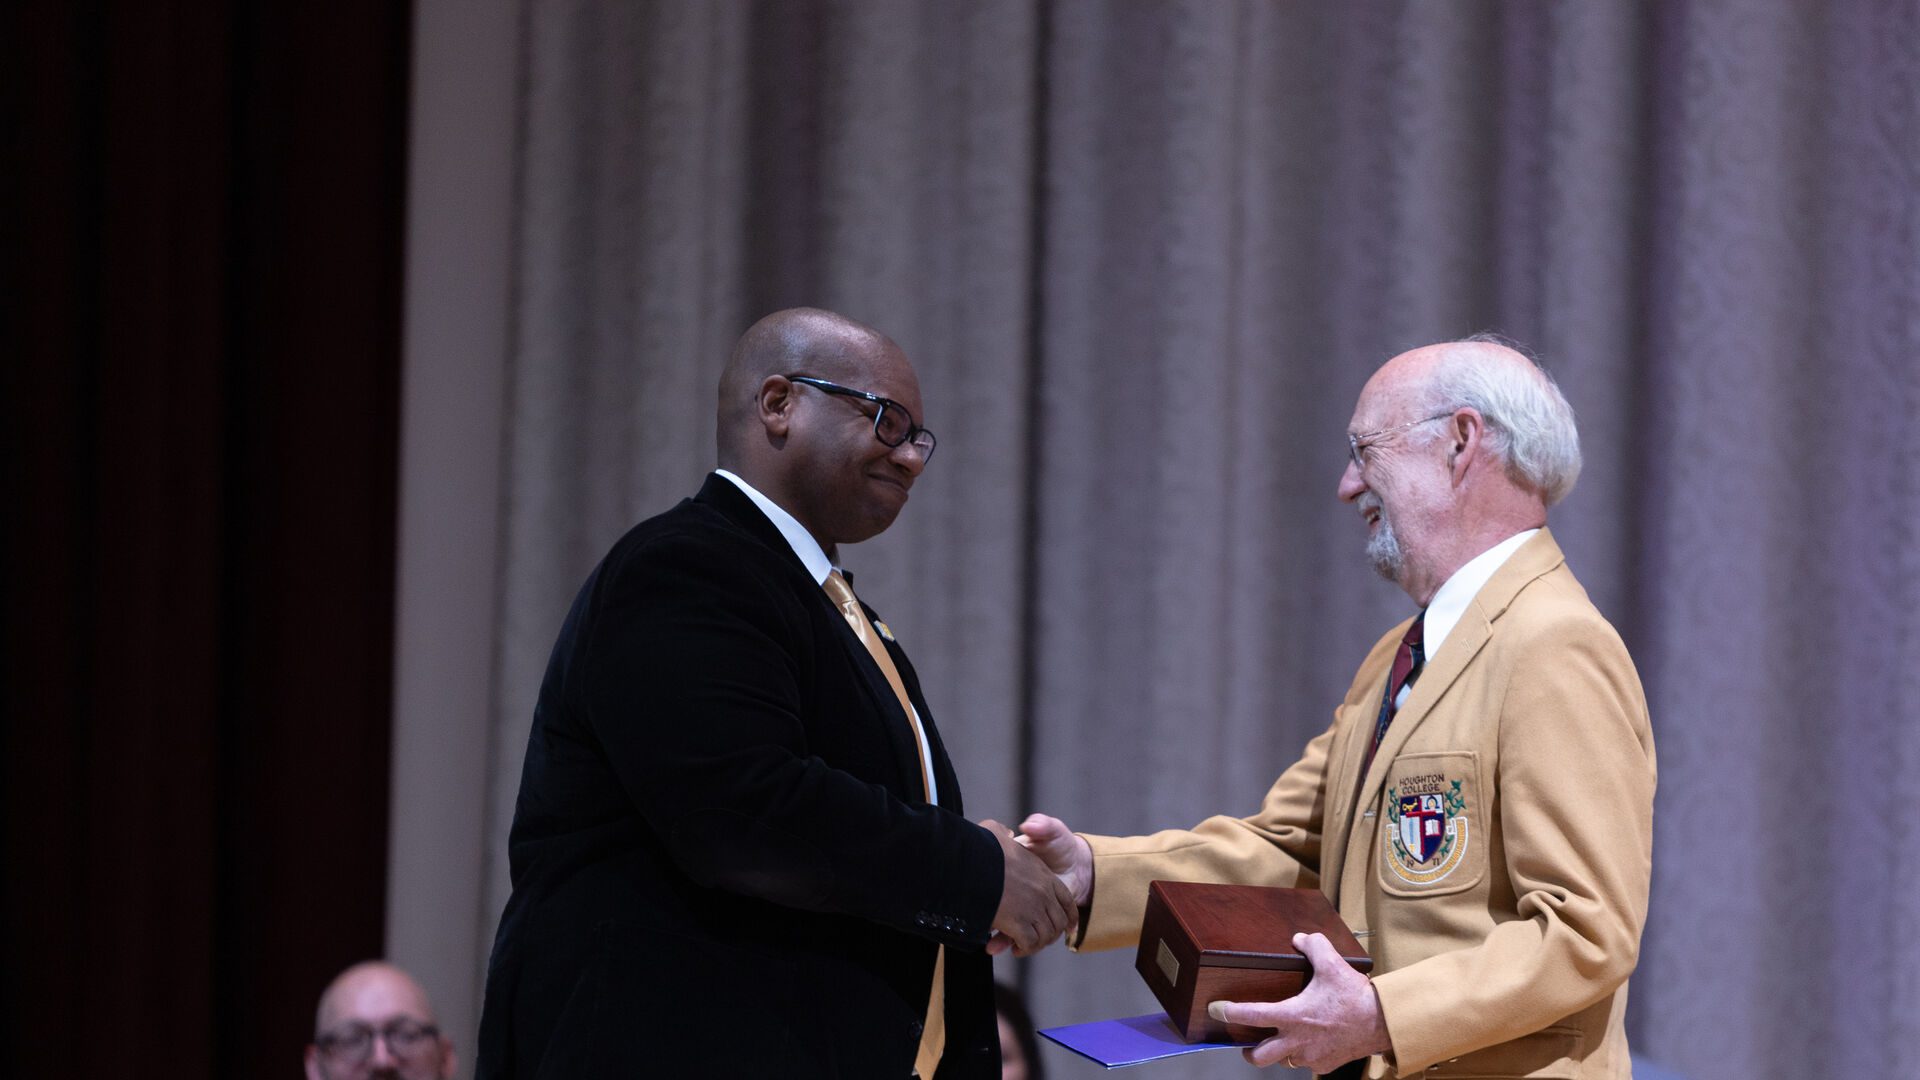 Houghton alumnus Dr. Carl Lynch receiving award from President Lewis.